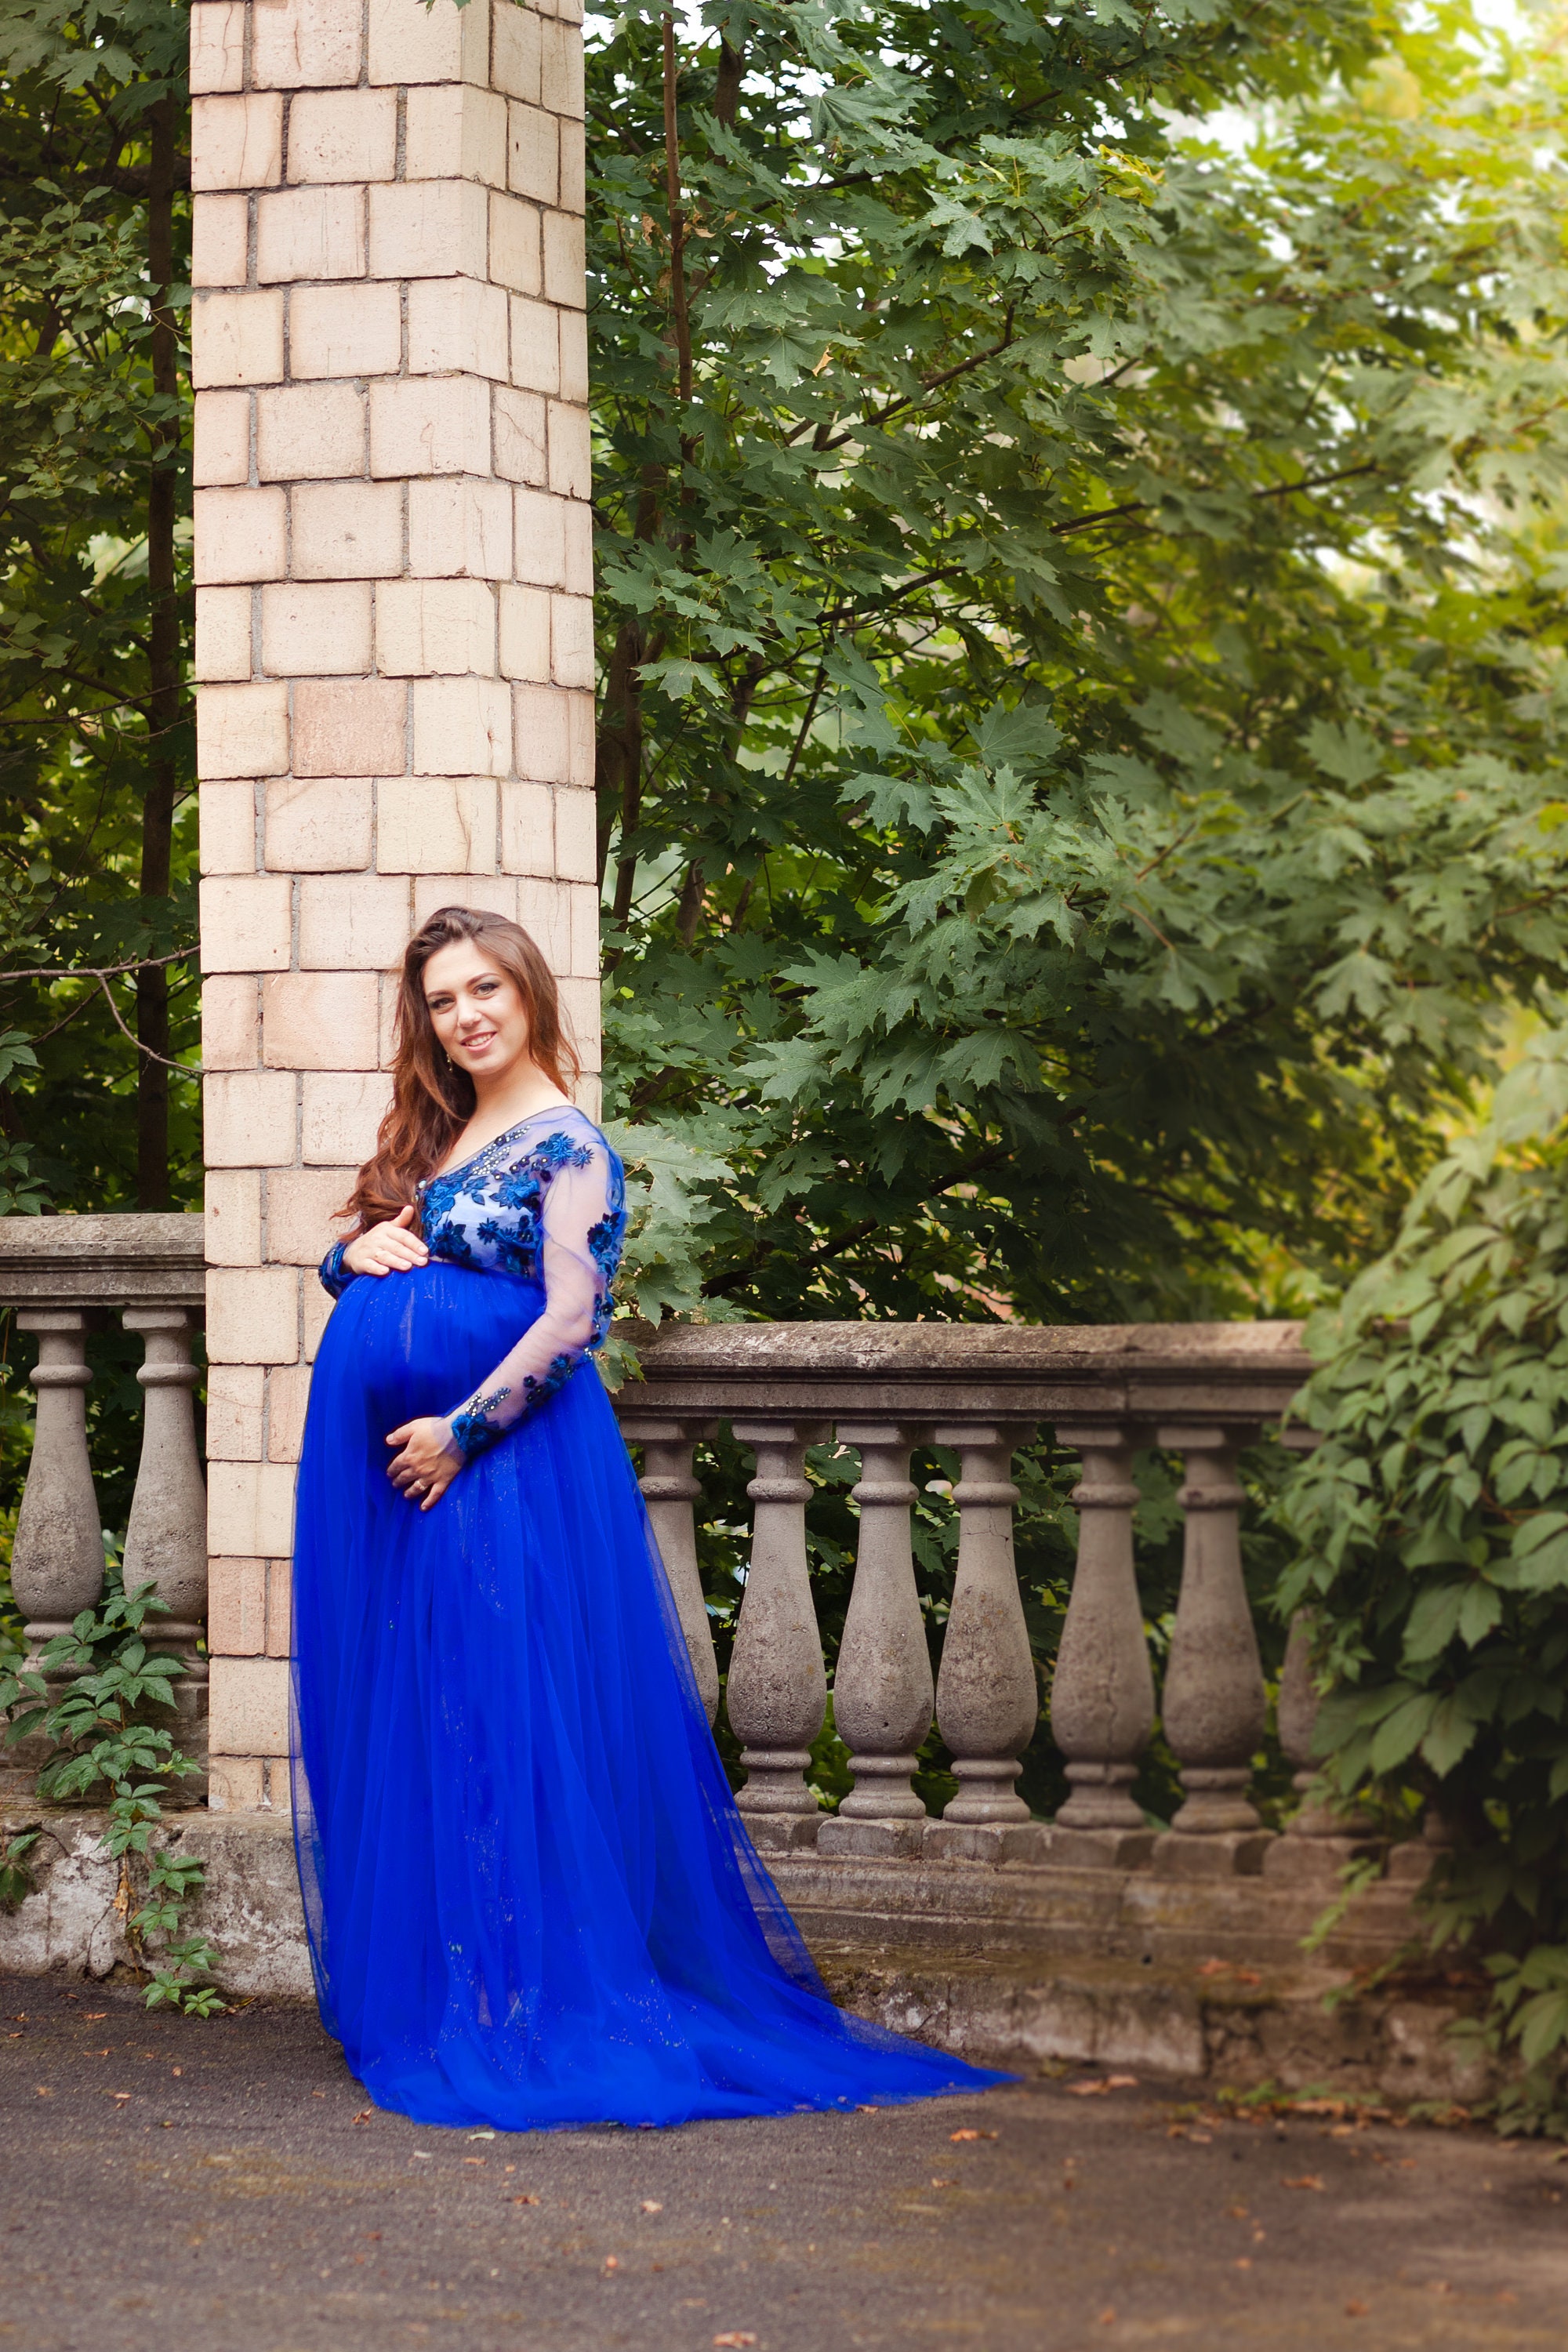 Royal Blue Tailored Maternity Dress